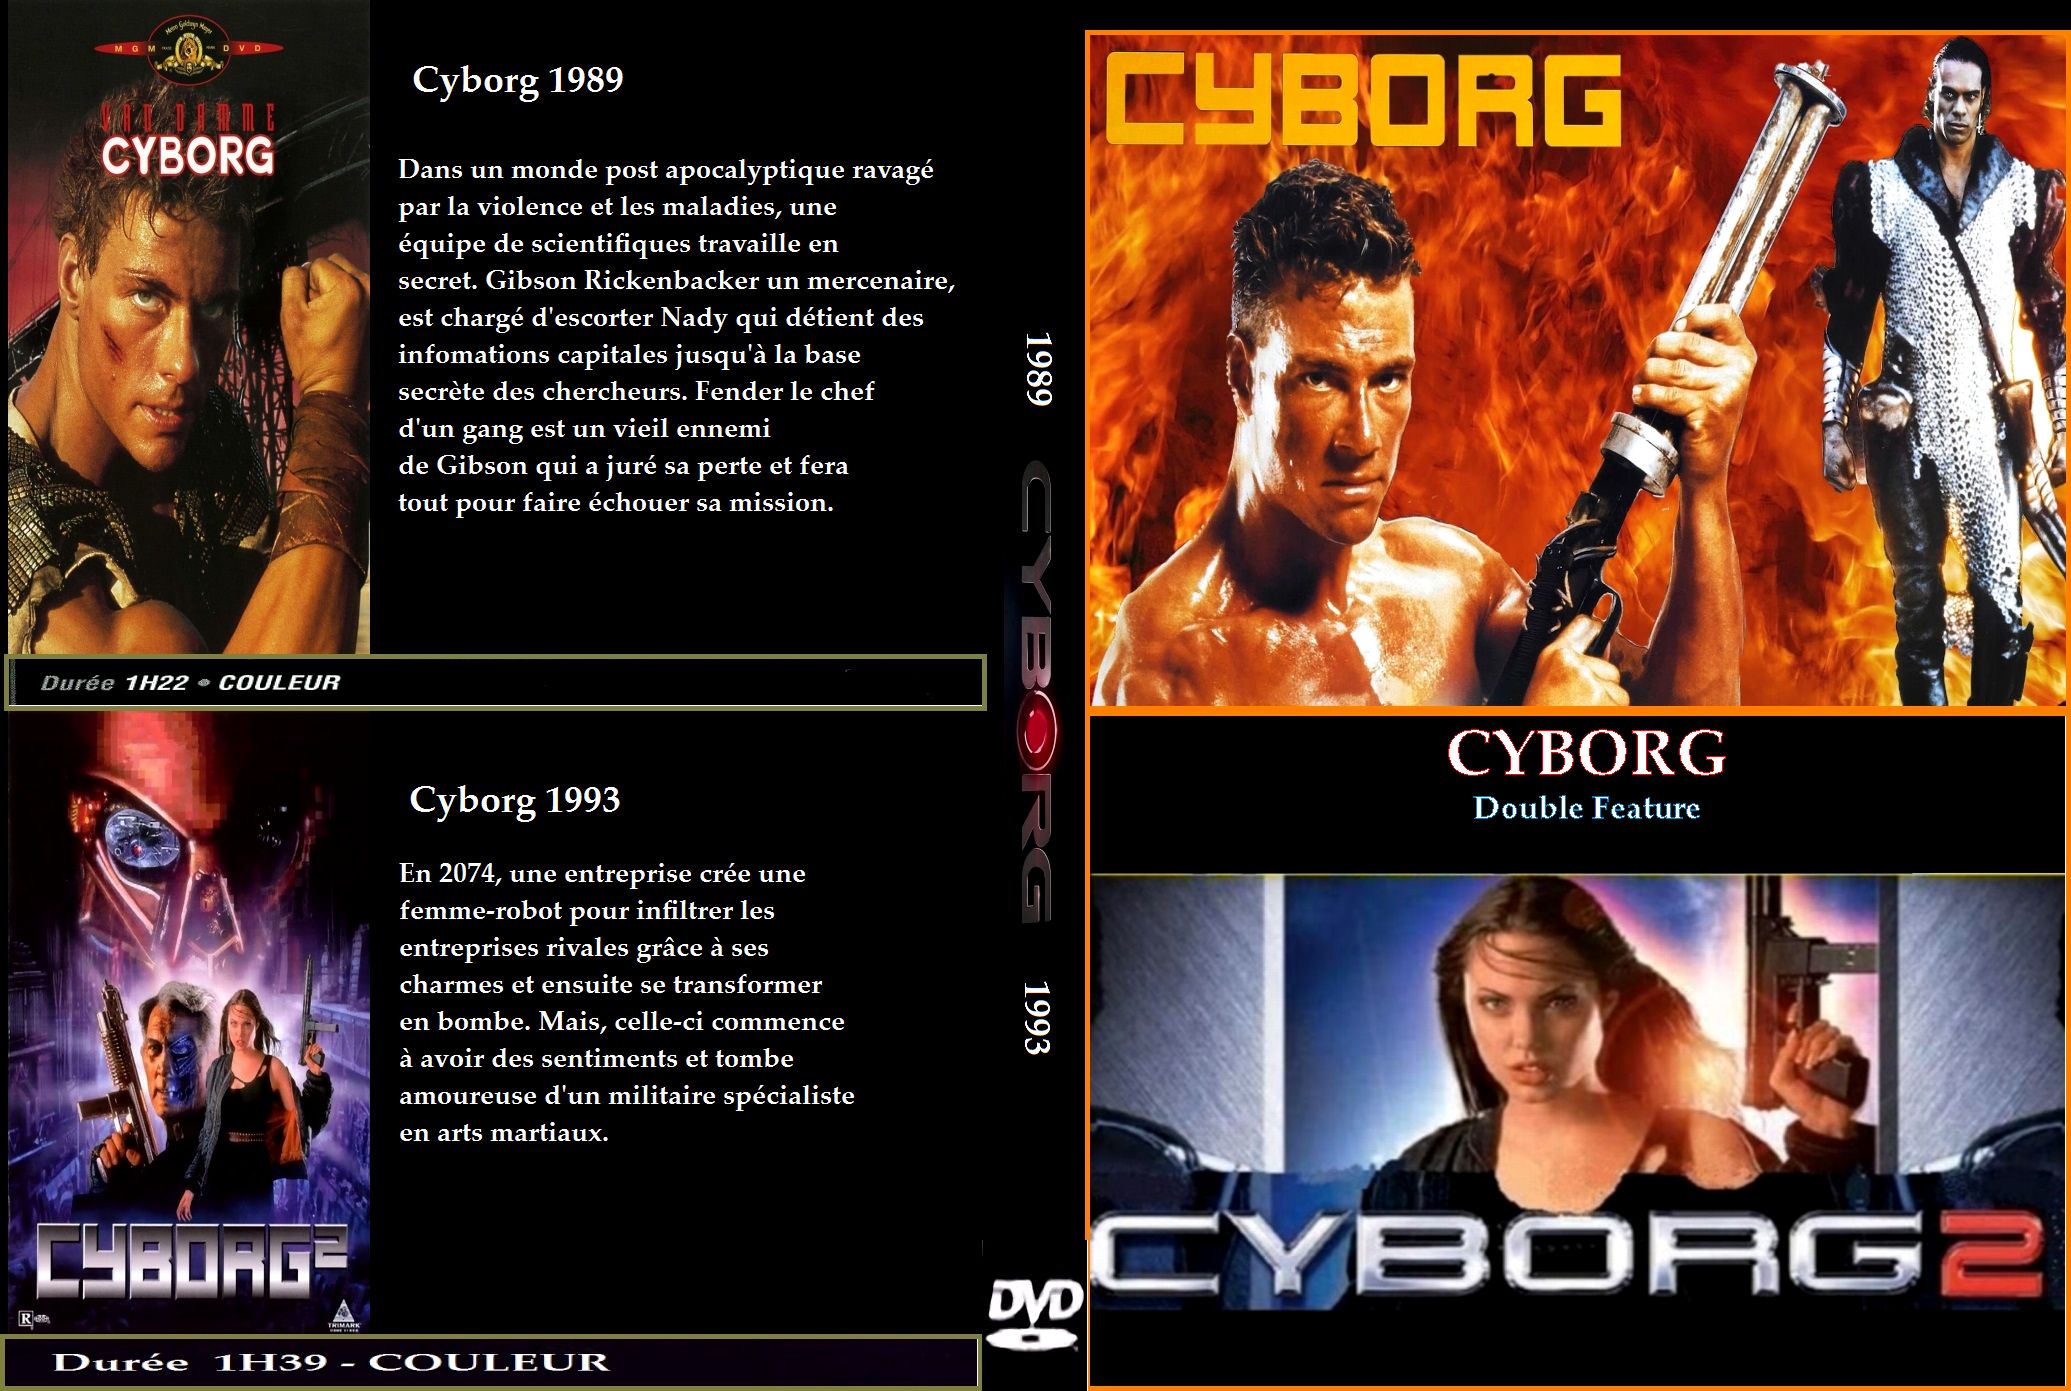 Jaquette DVD Cyborg 1 & Cyborg 2 custom